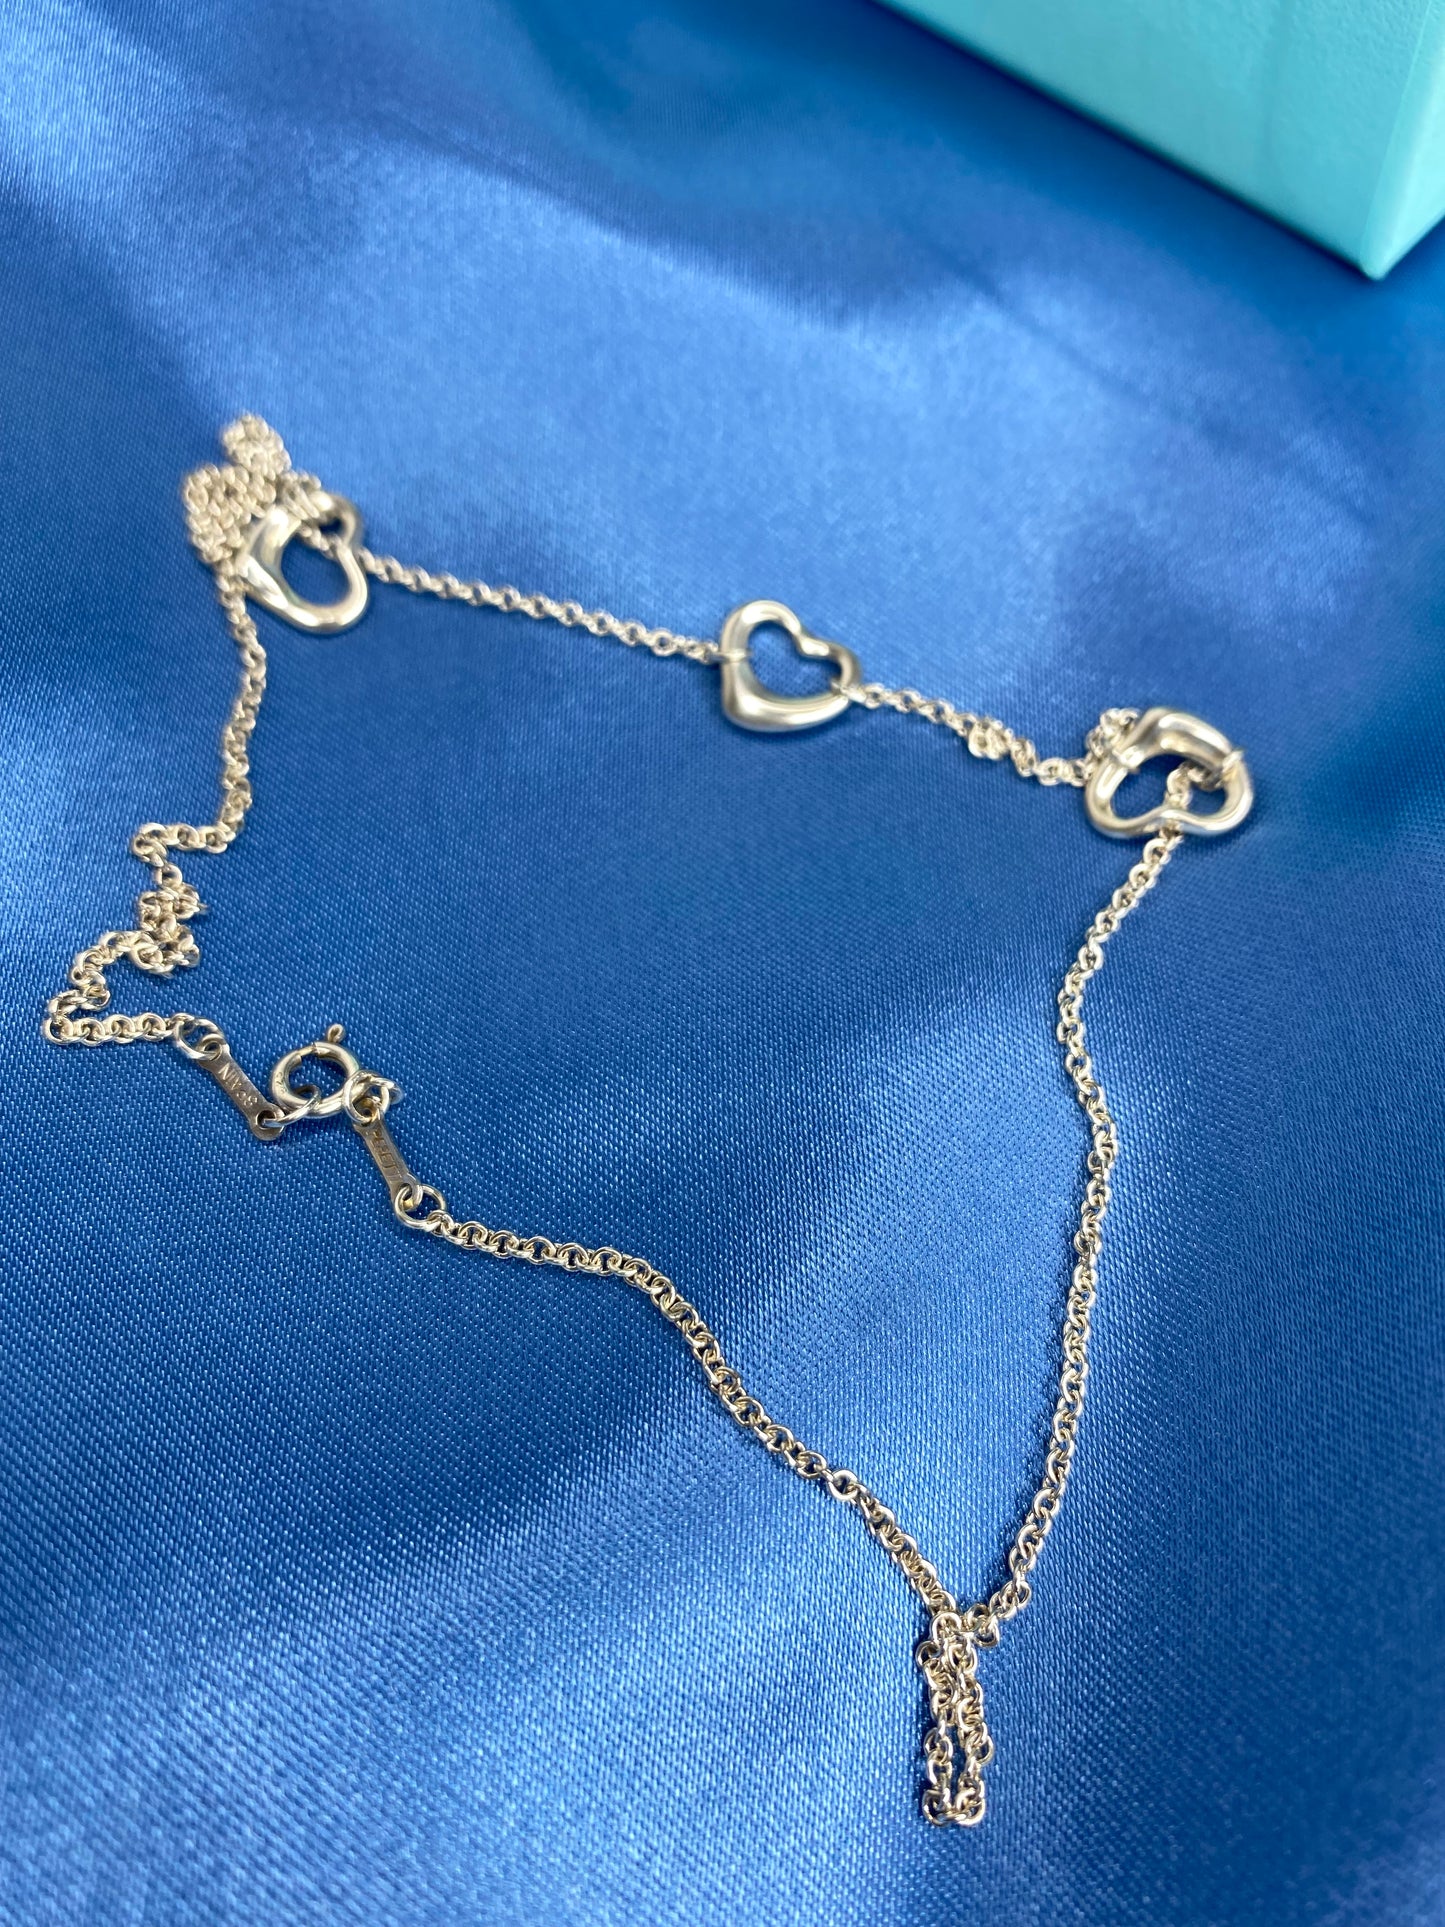 Tiffany Elsa Peretti Open Heart Sets Silver - Stud Earrings, Necklace and Bracelet